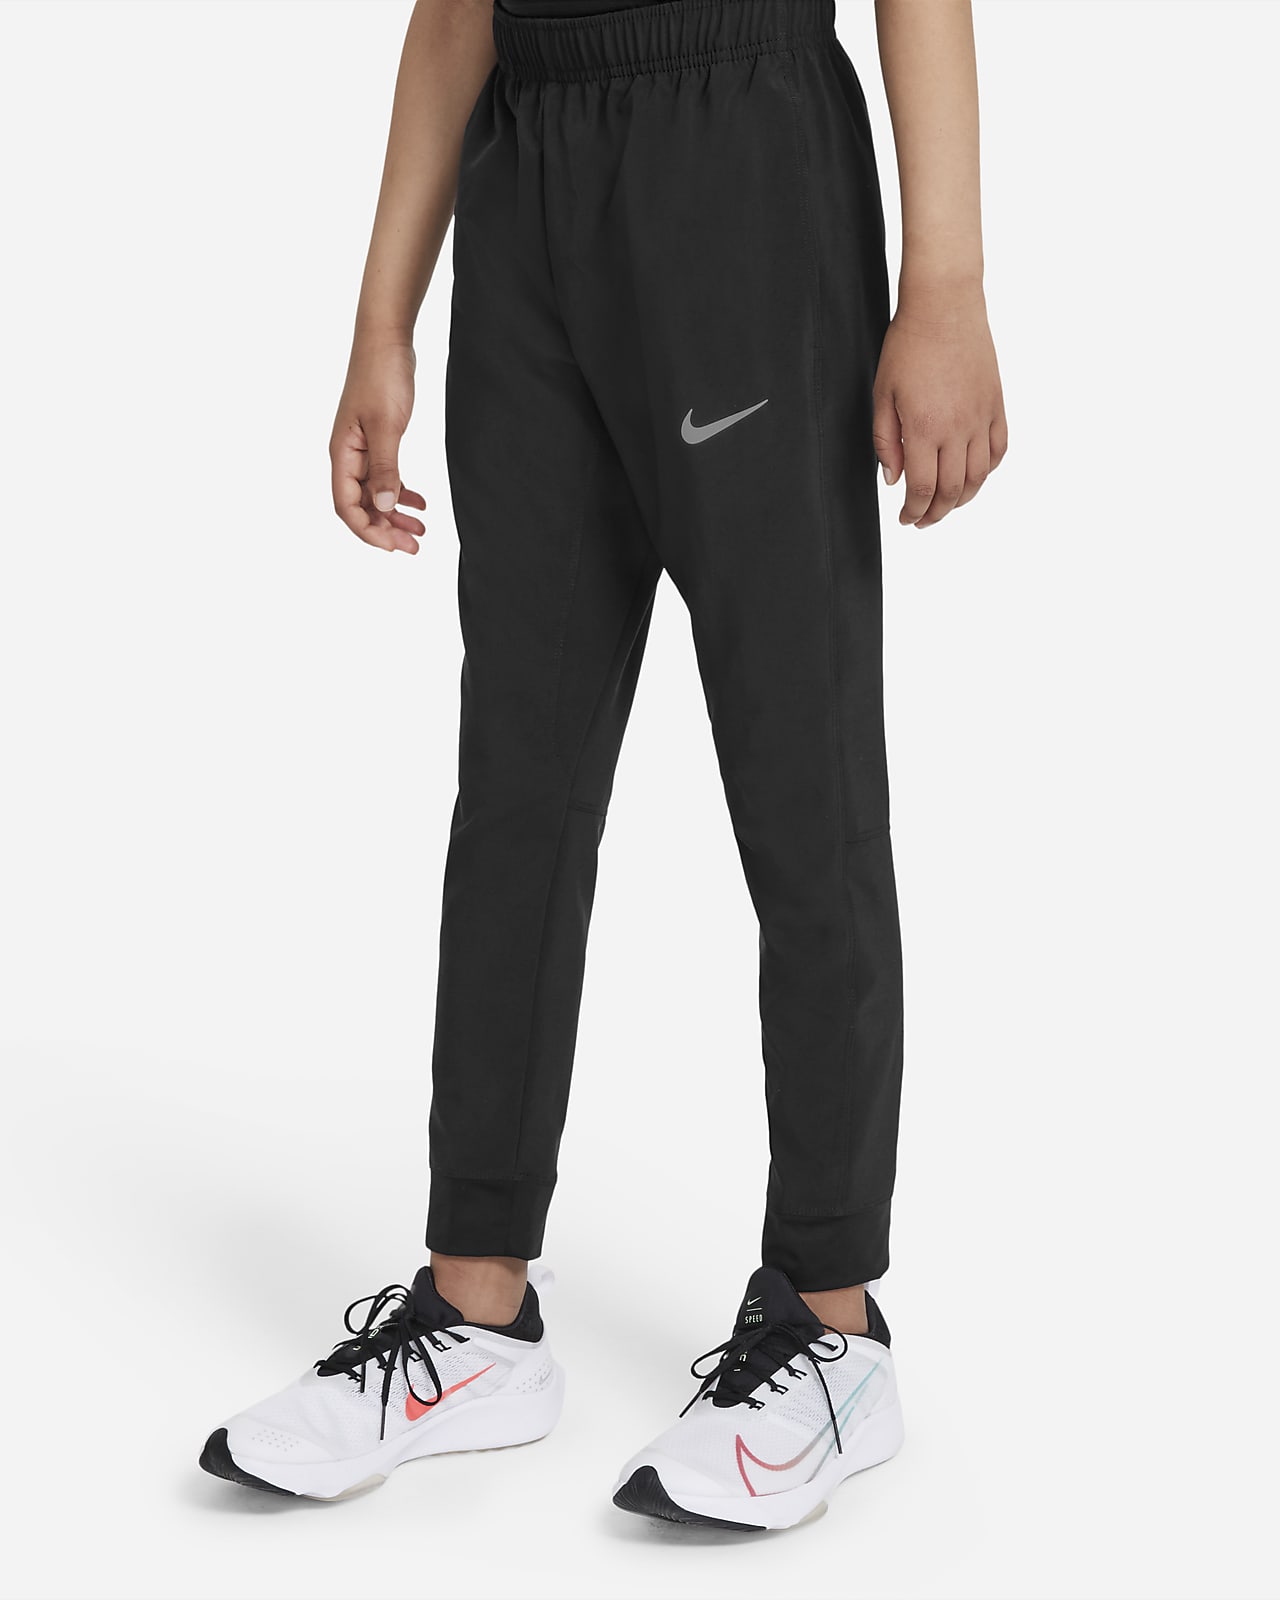 Nike Youth Epic Pants | Tennis Express